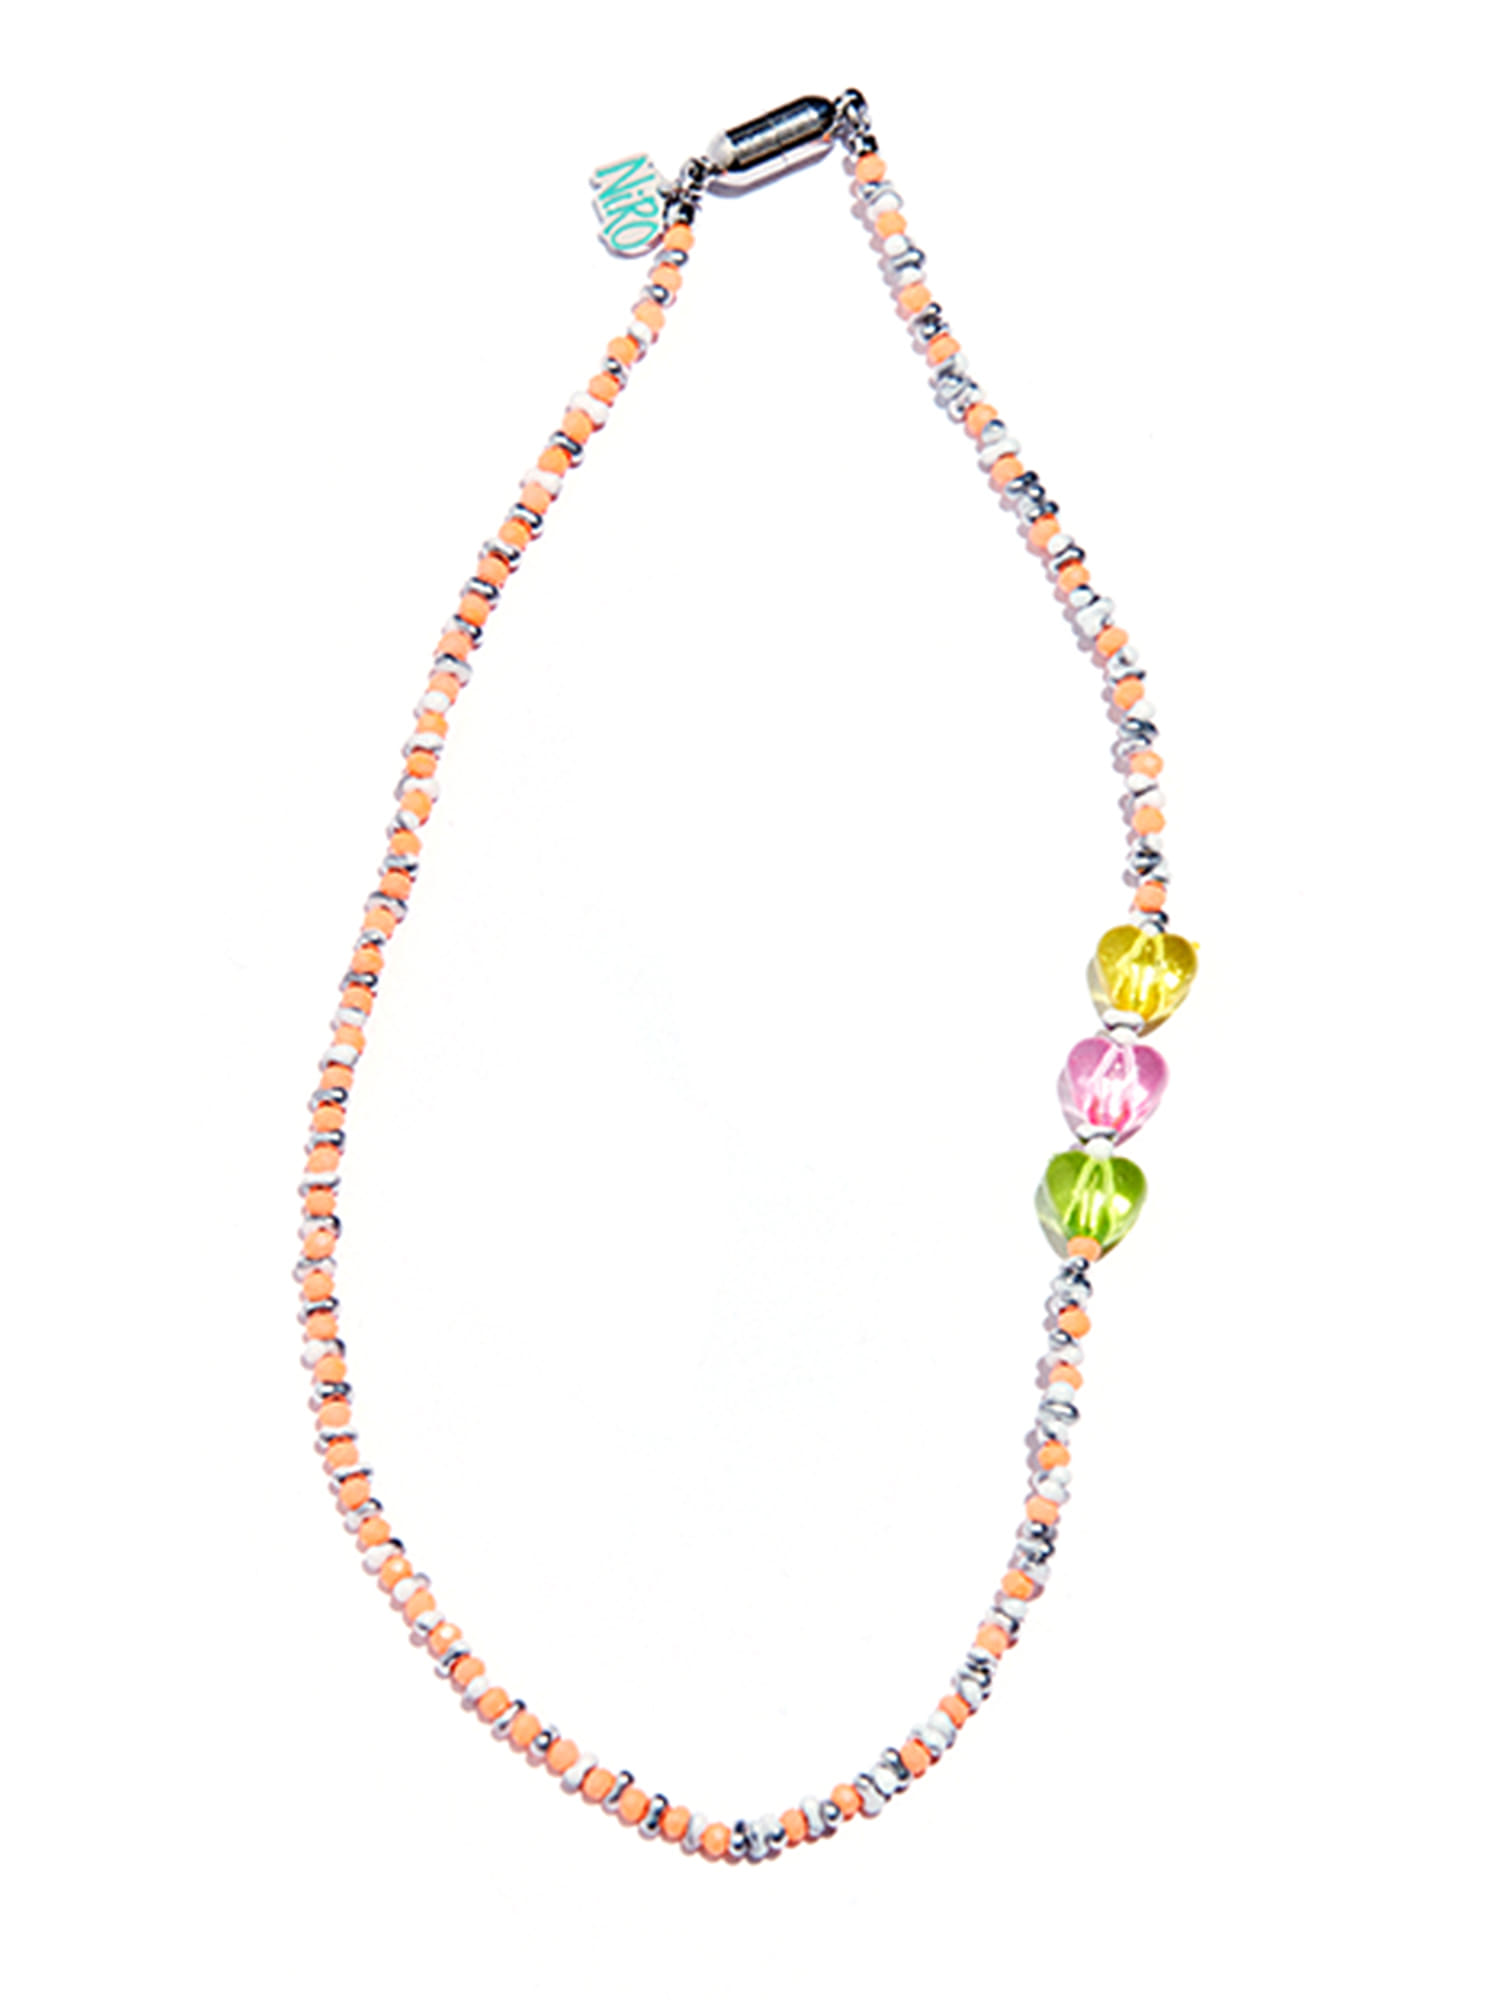 G.P.Y Heart Orange Beads Necklace #91